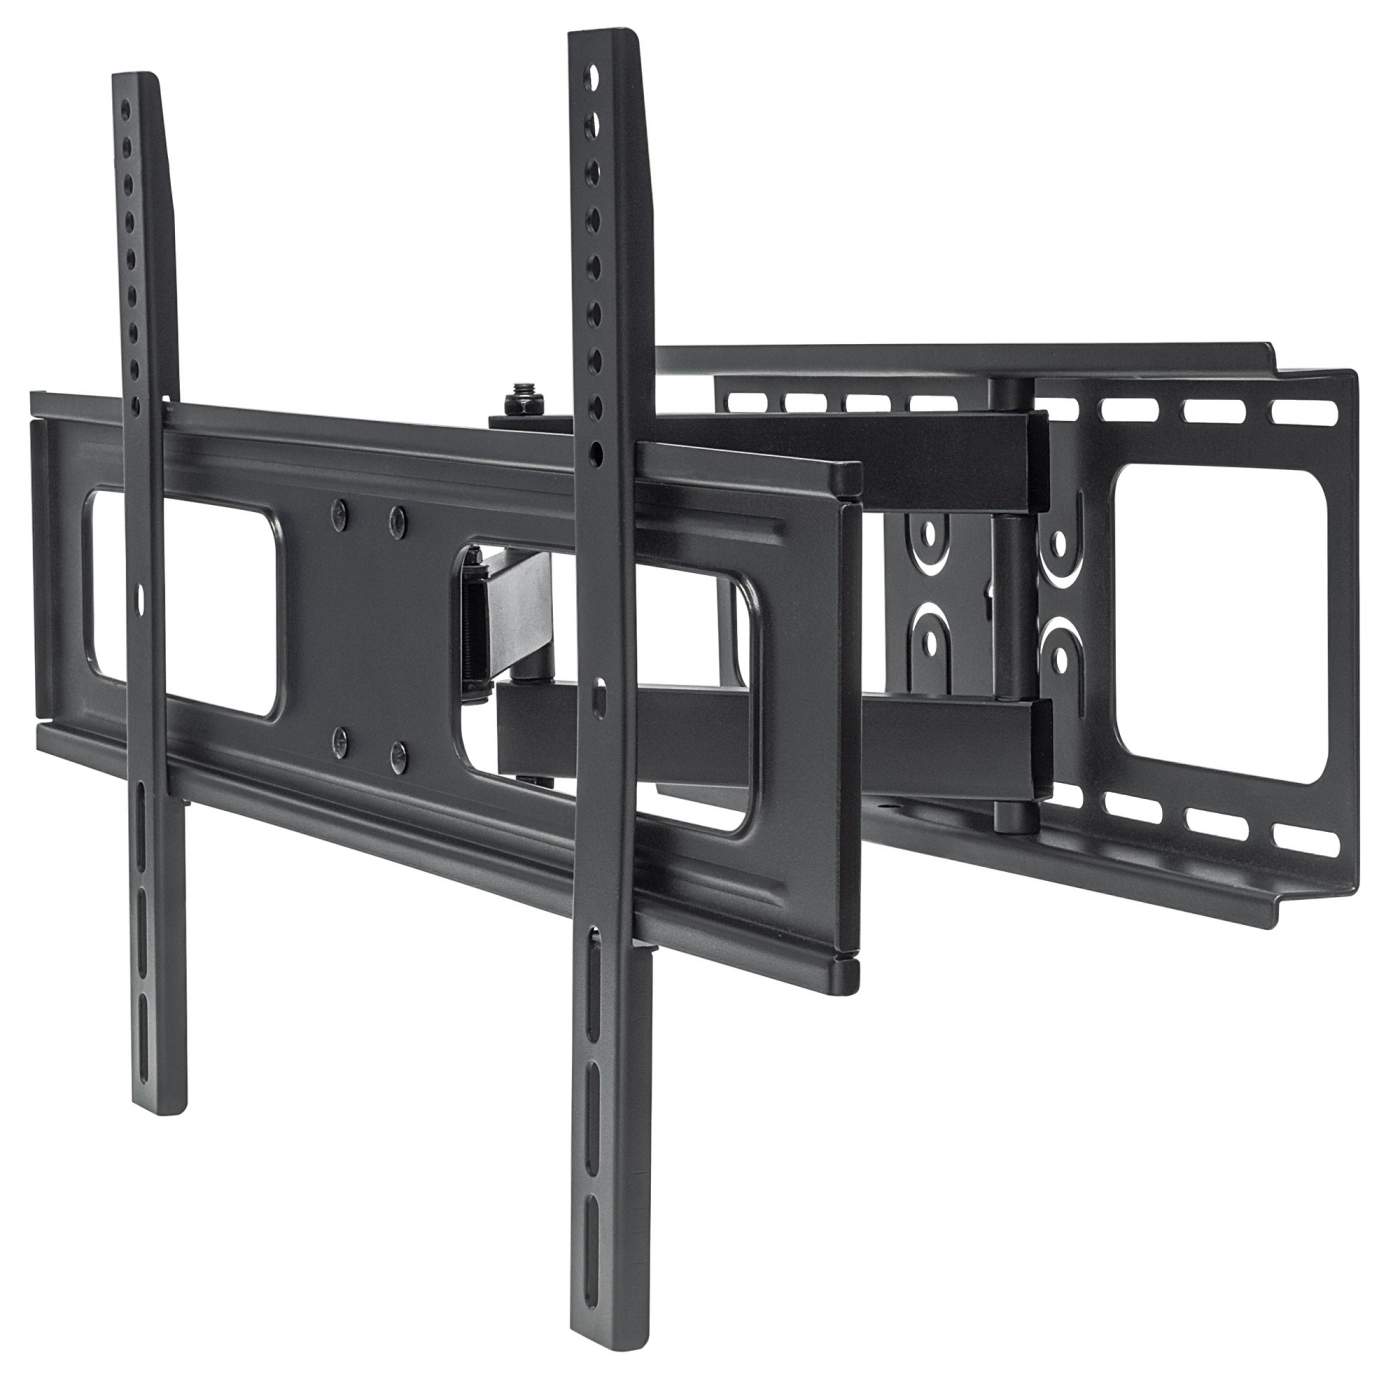  Soporte de pared con soporte giratorio para TV, soporte de pared  universal, soporte universal para TV, soporte de TV ajustable, adecuado  para TV de 26 a 32 pulgadas, audaz y reforzado 